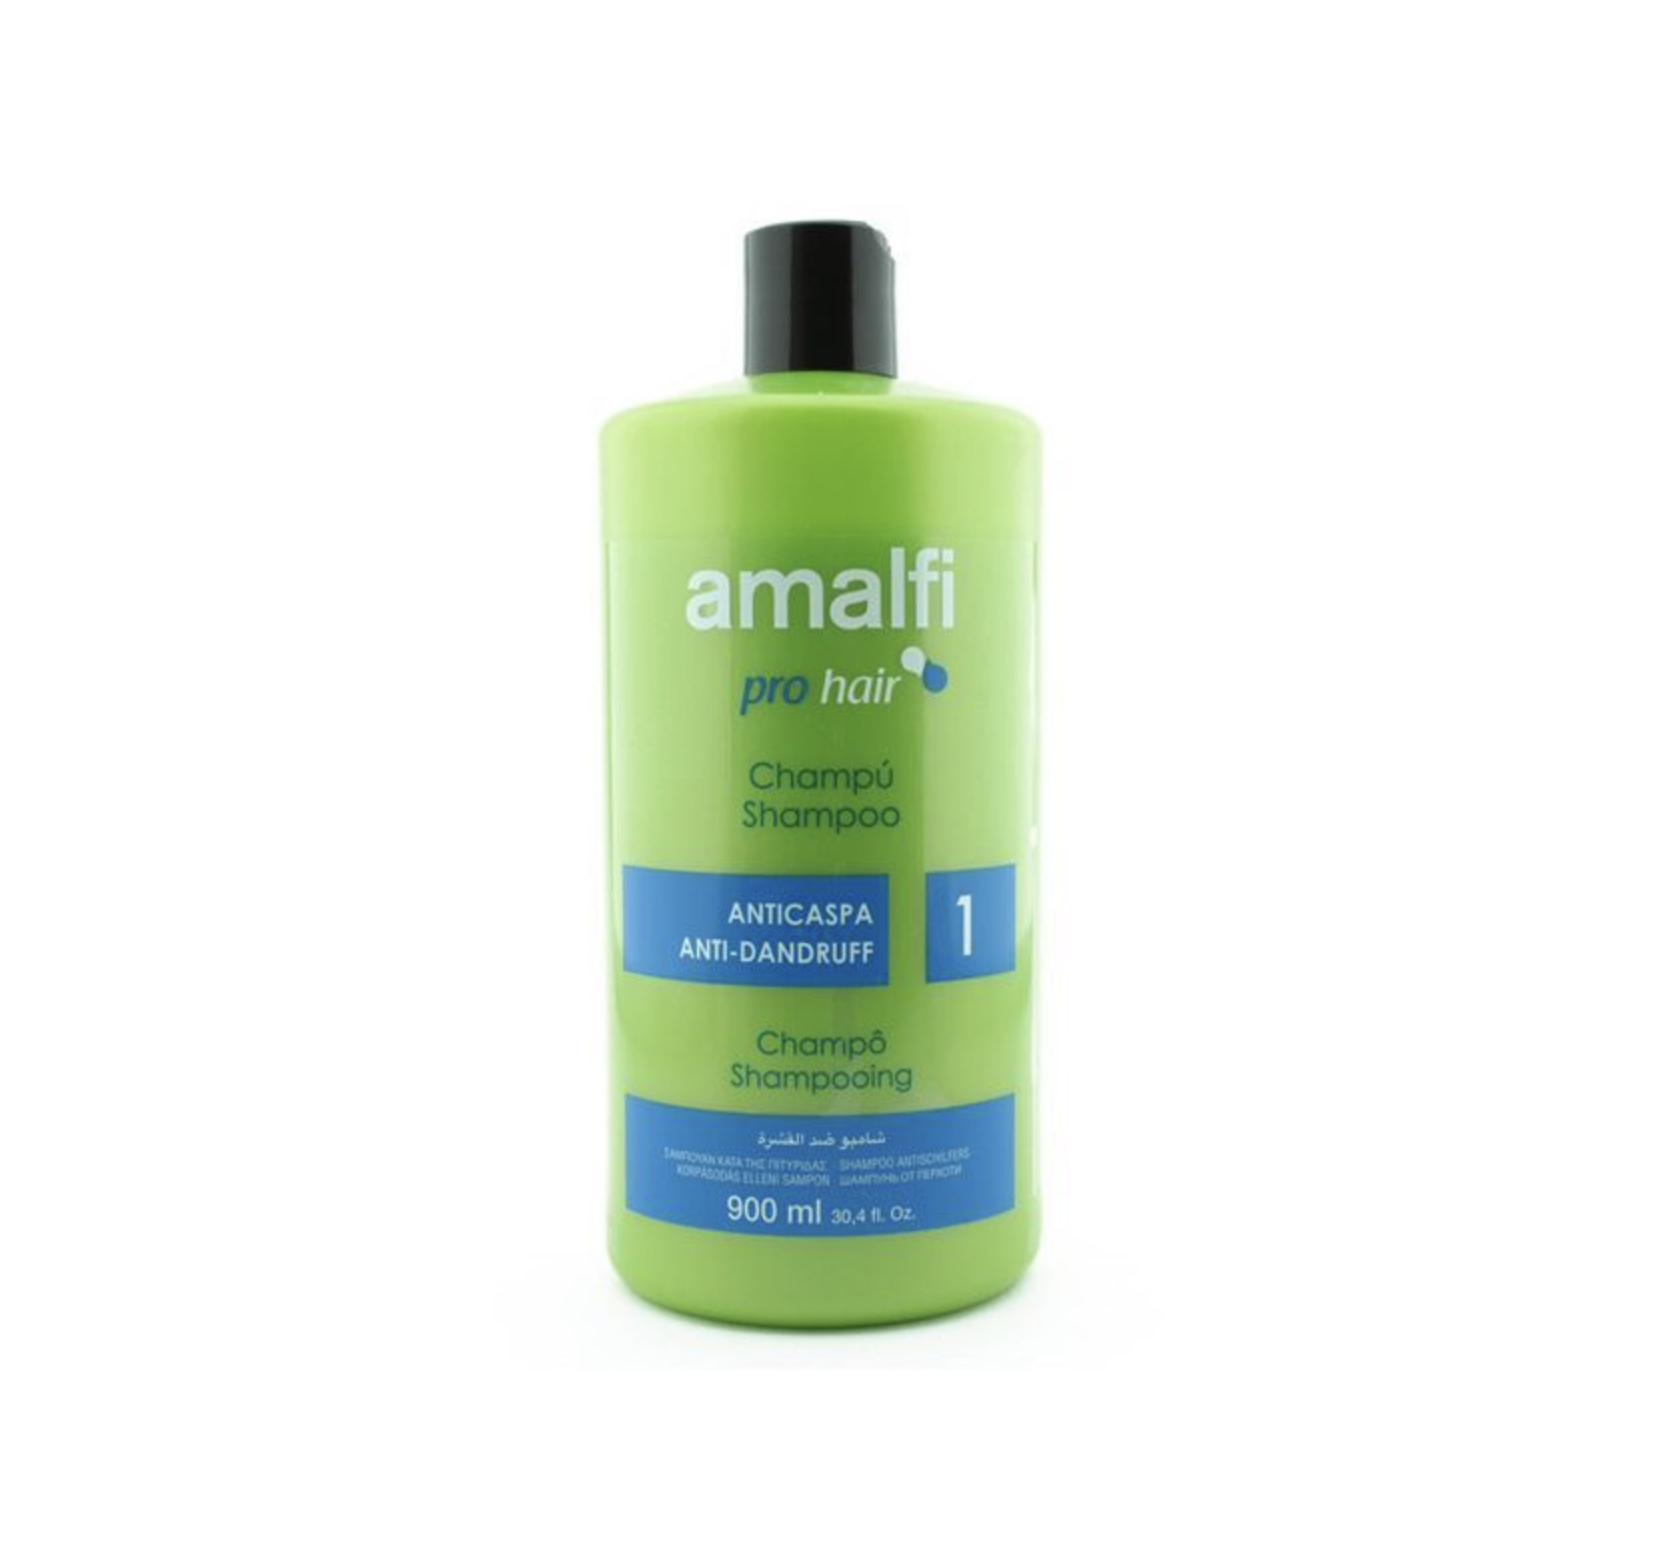   / Amalfi Pro Hair -      Anti-dandruff 1 900 